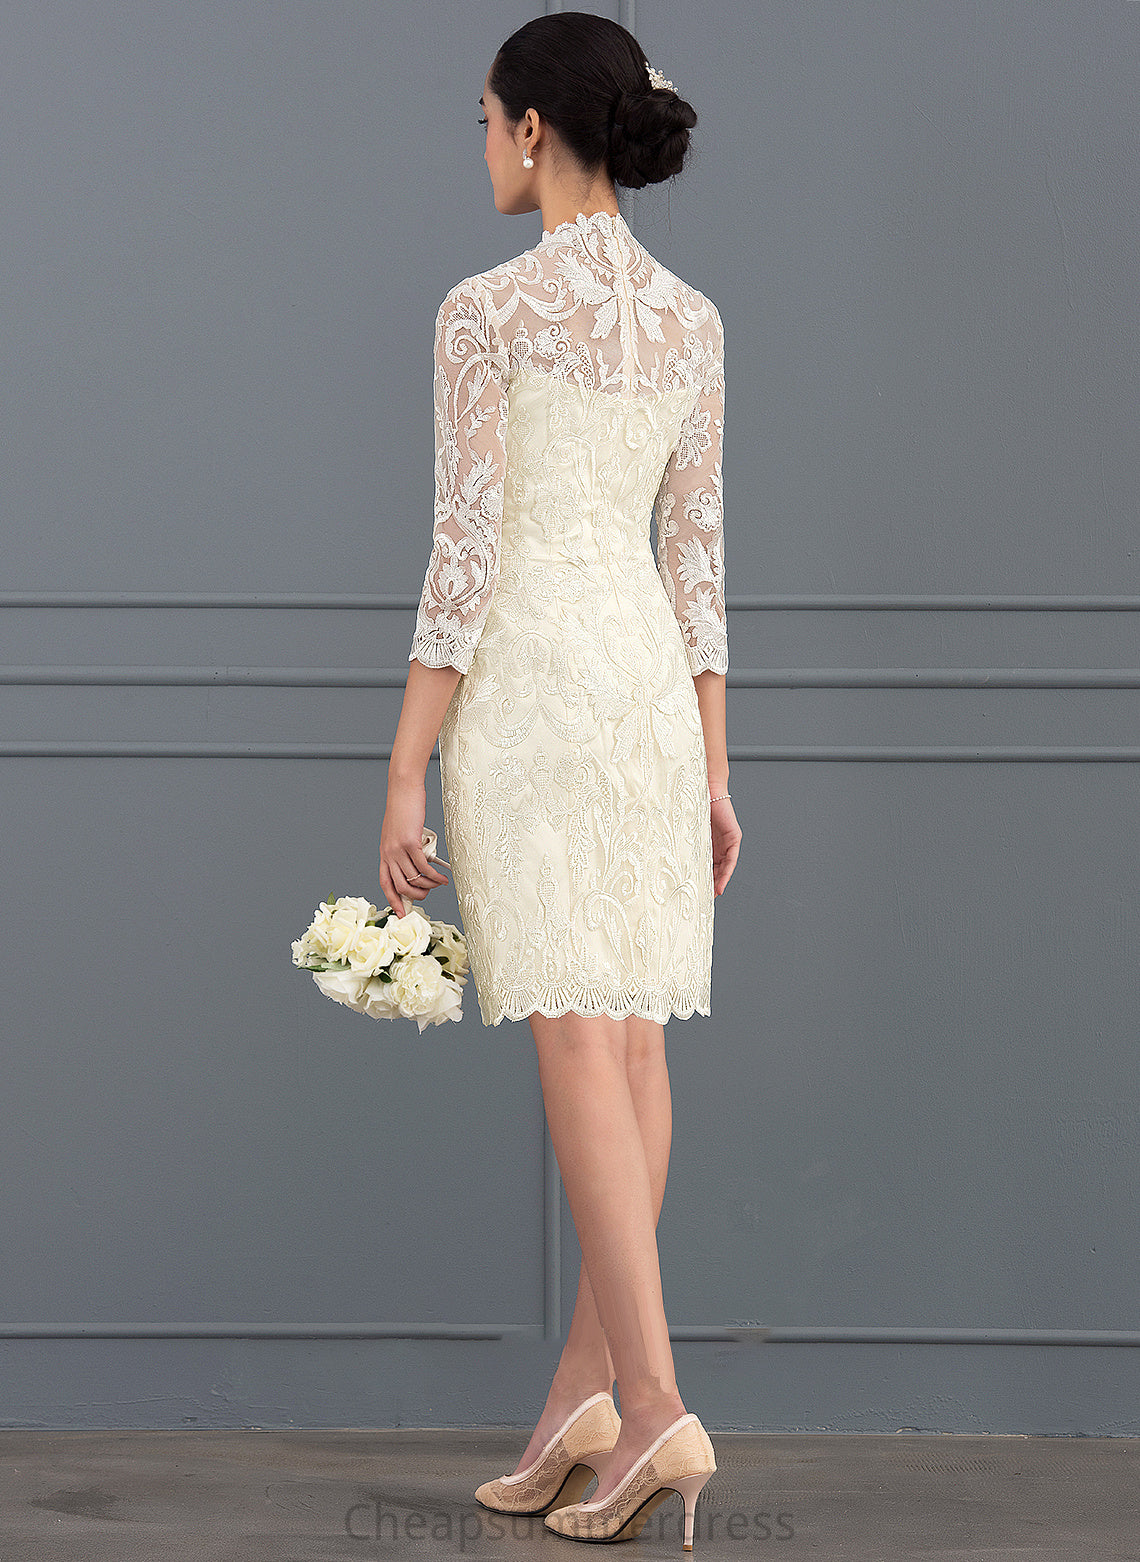 Dress Lace High Wedding Dresses Wedding Neck Sheath/Column Arianna Knee-Length